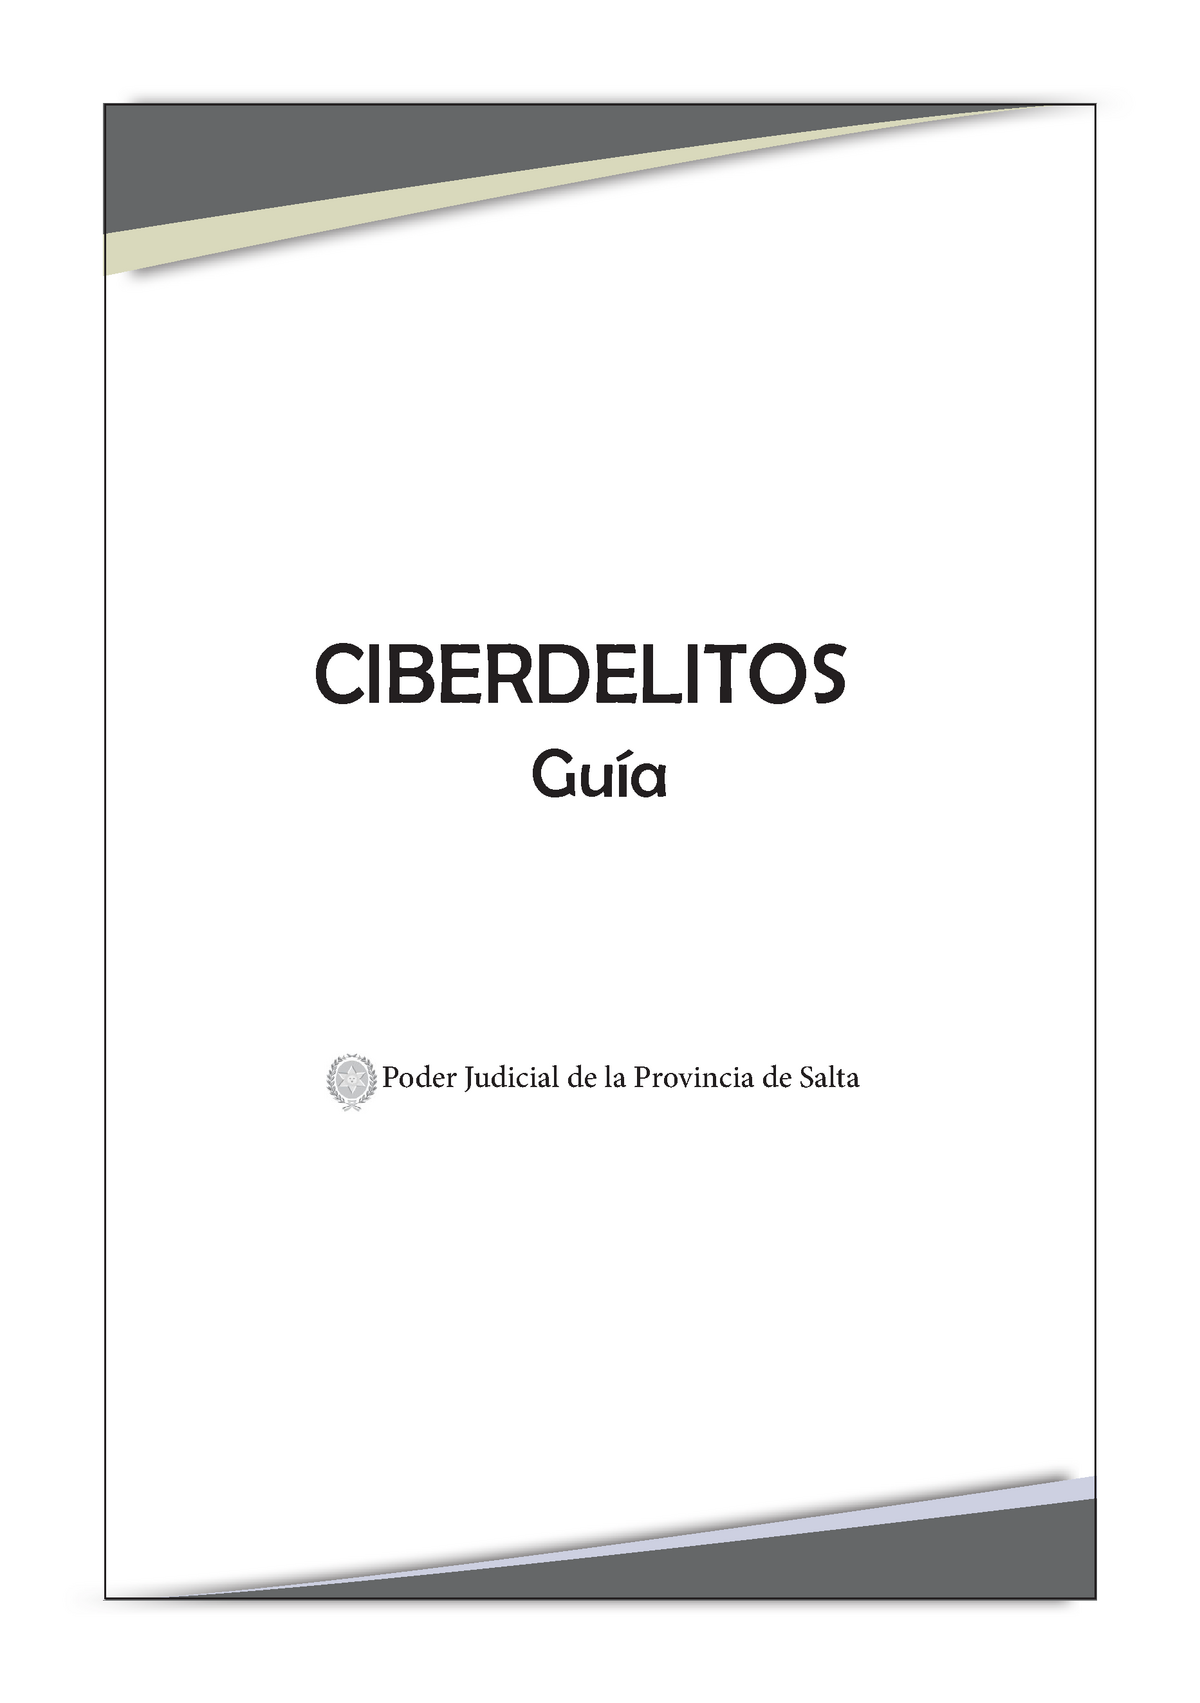 Ciberdelitos Web V020518 Ciberdelitos Poder Judicial De La Provincia De Salta Guía 1 5123